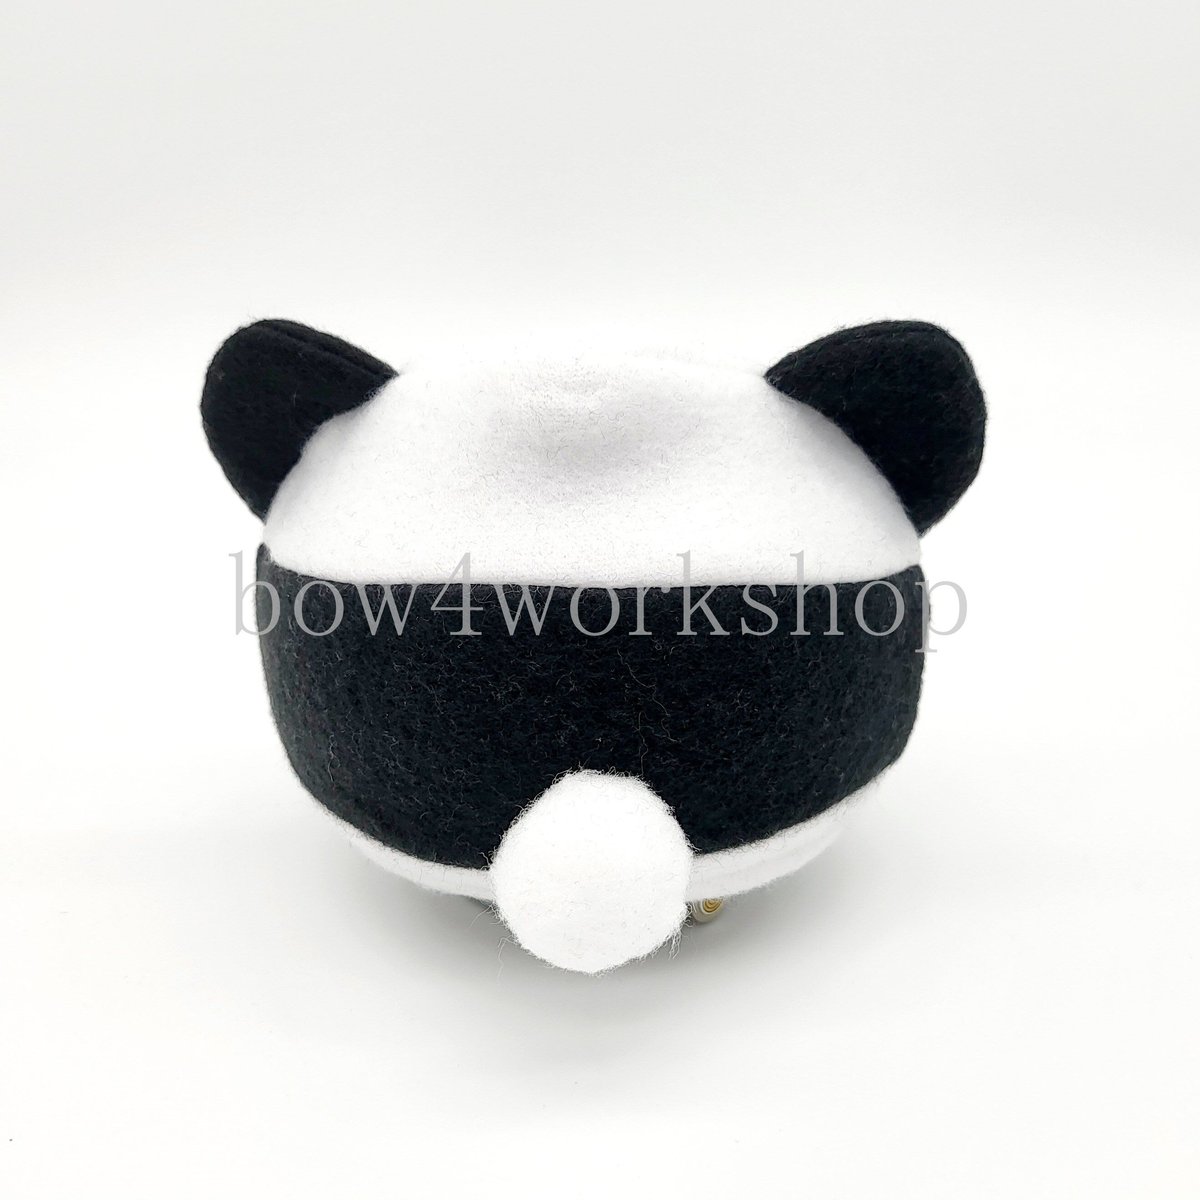 Romi（ ロミィ）の服 パンダちゃんの服 | bow4workshop STORE